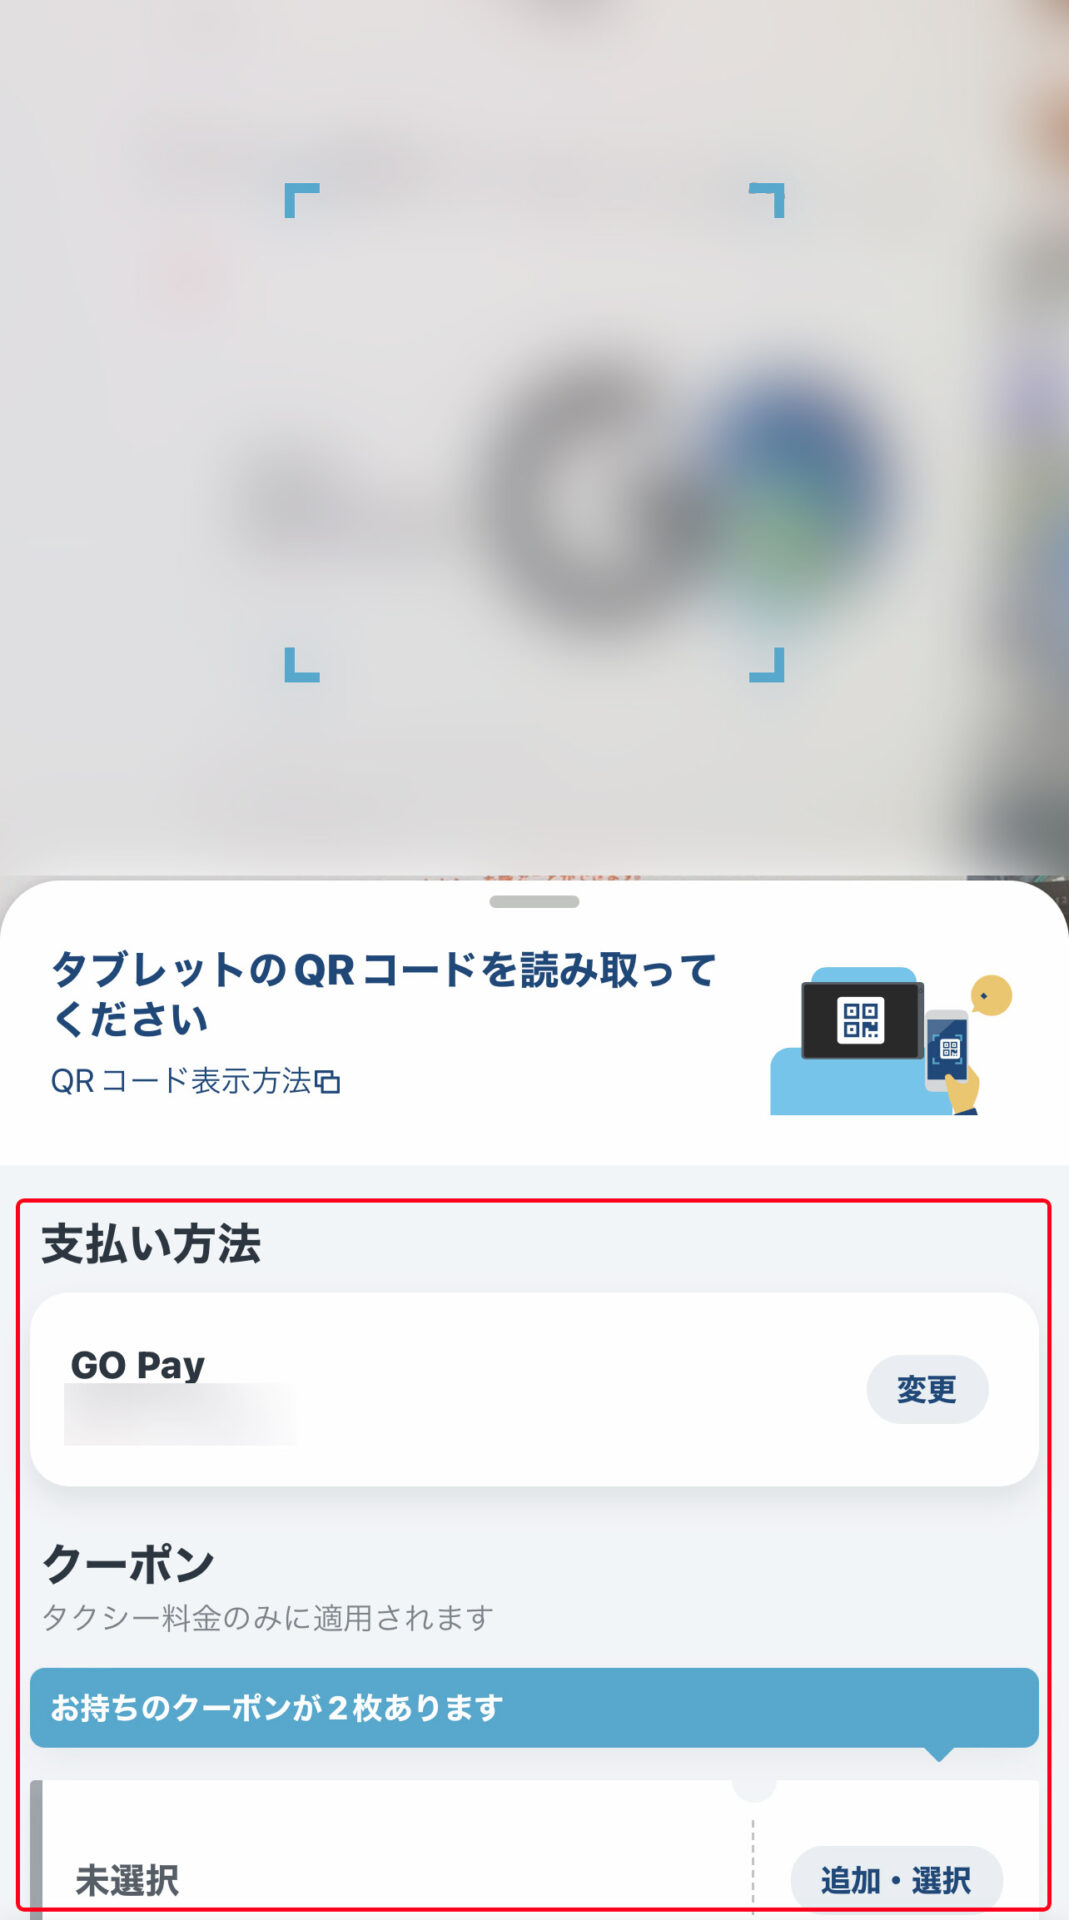 GO Payでの支払い方法